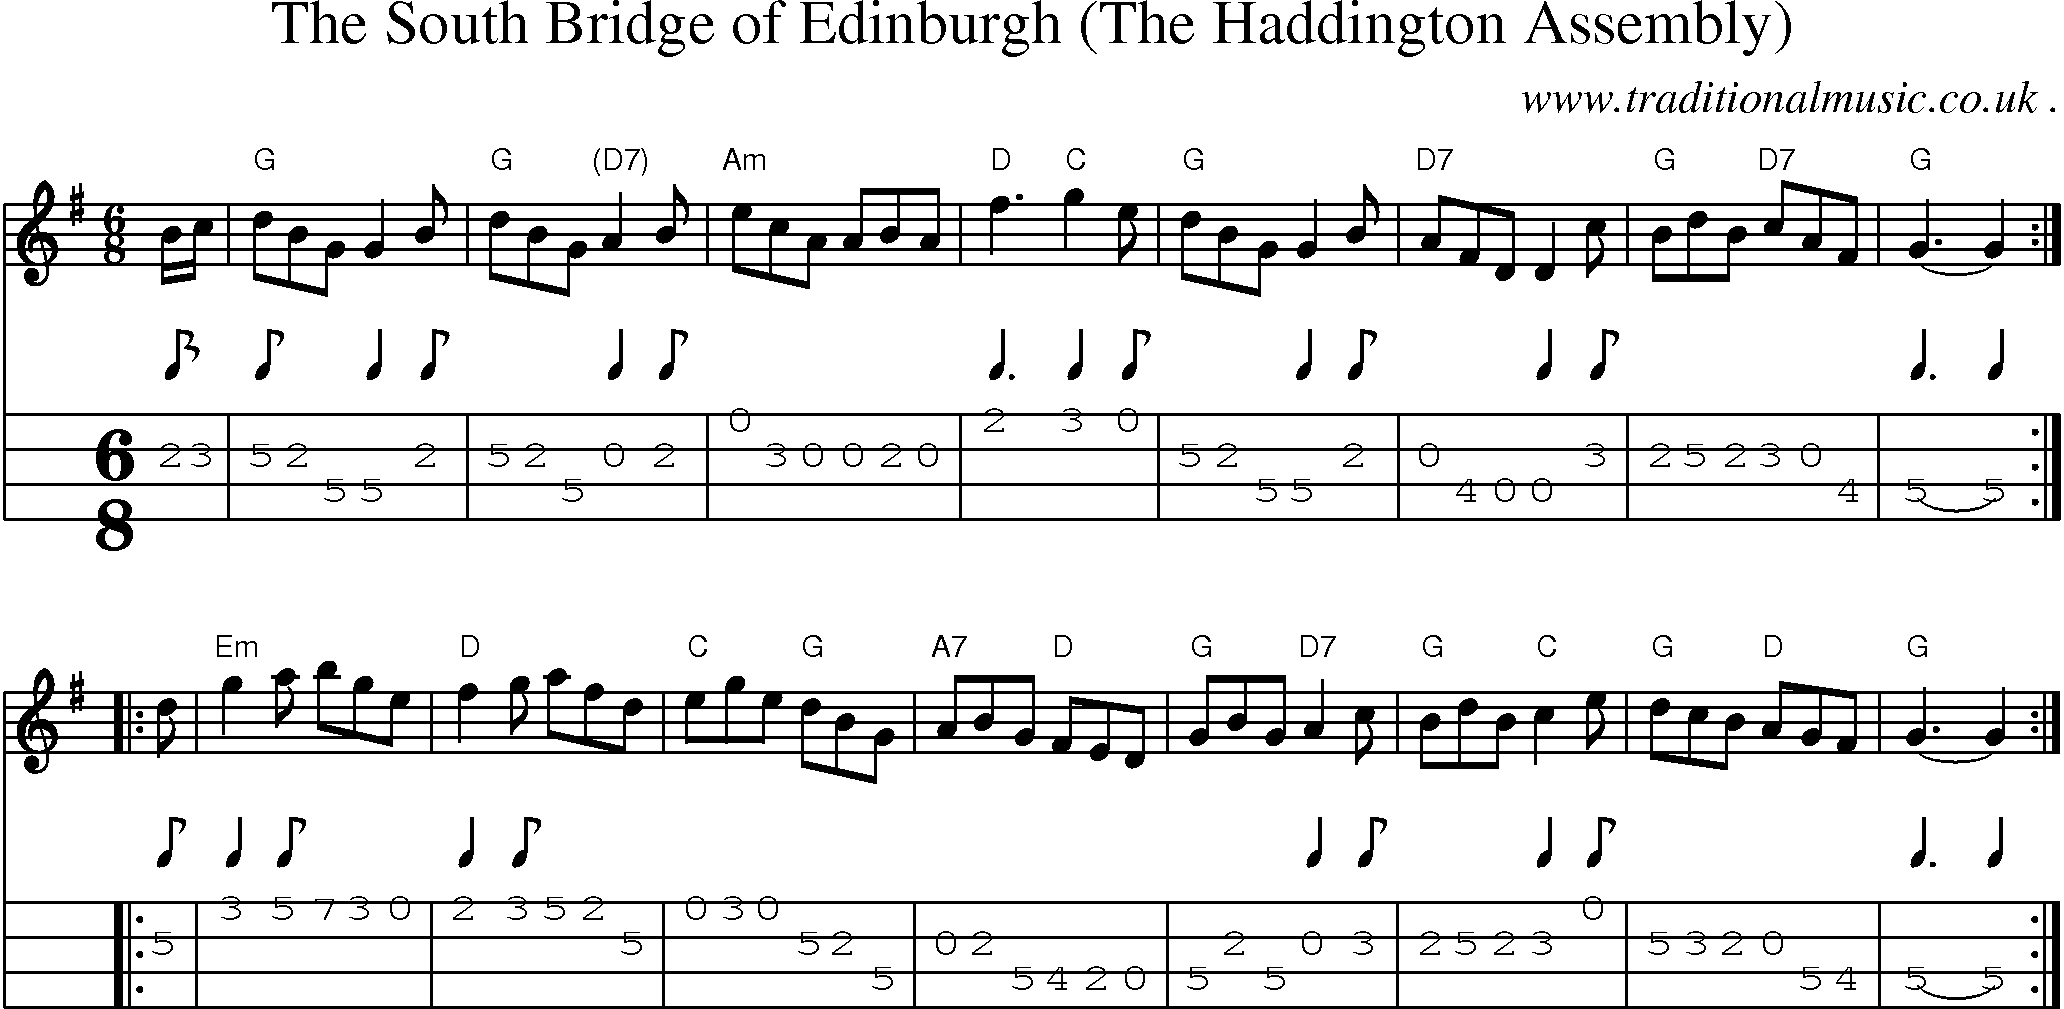 Sheet-music  score, Chords and Mandolin Tabs for The South Bridge Of Edinburgh The Haddington Assembly